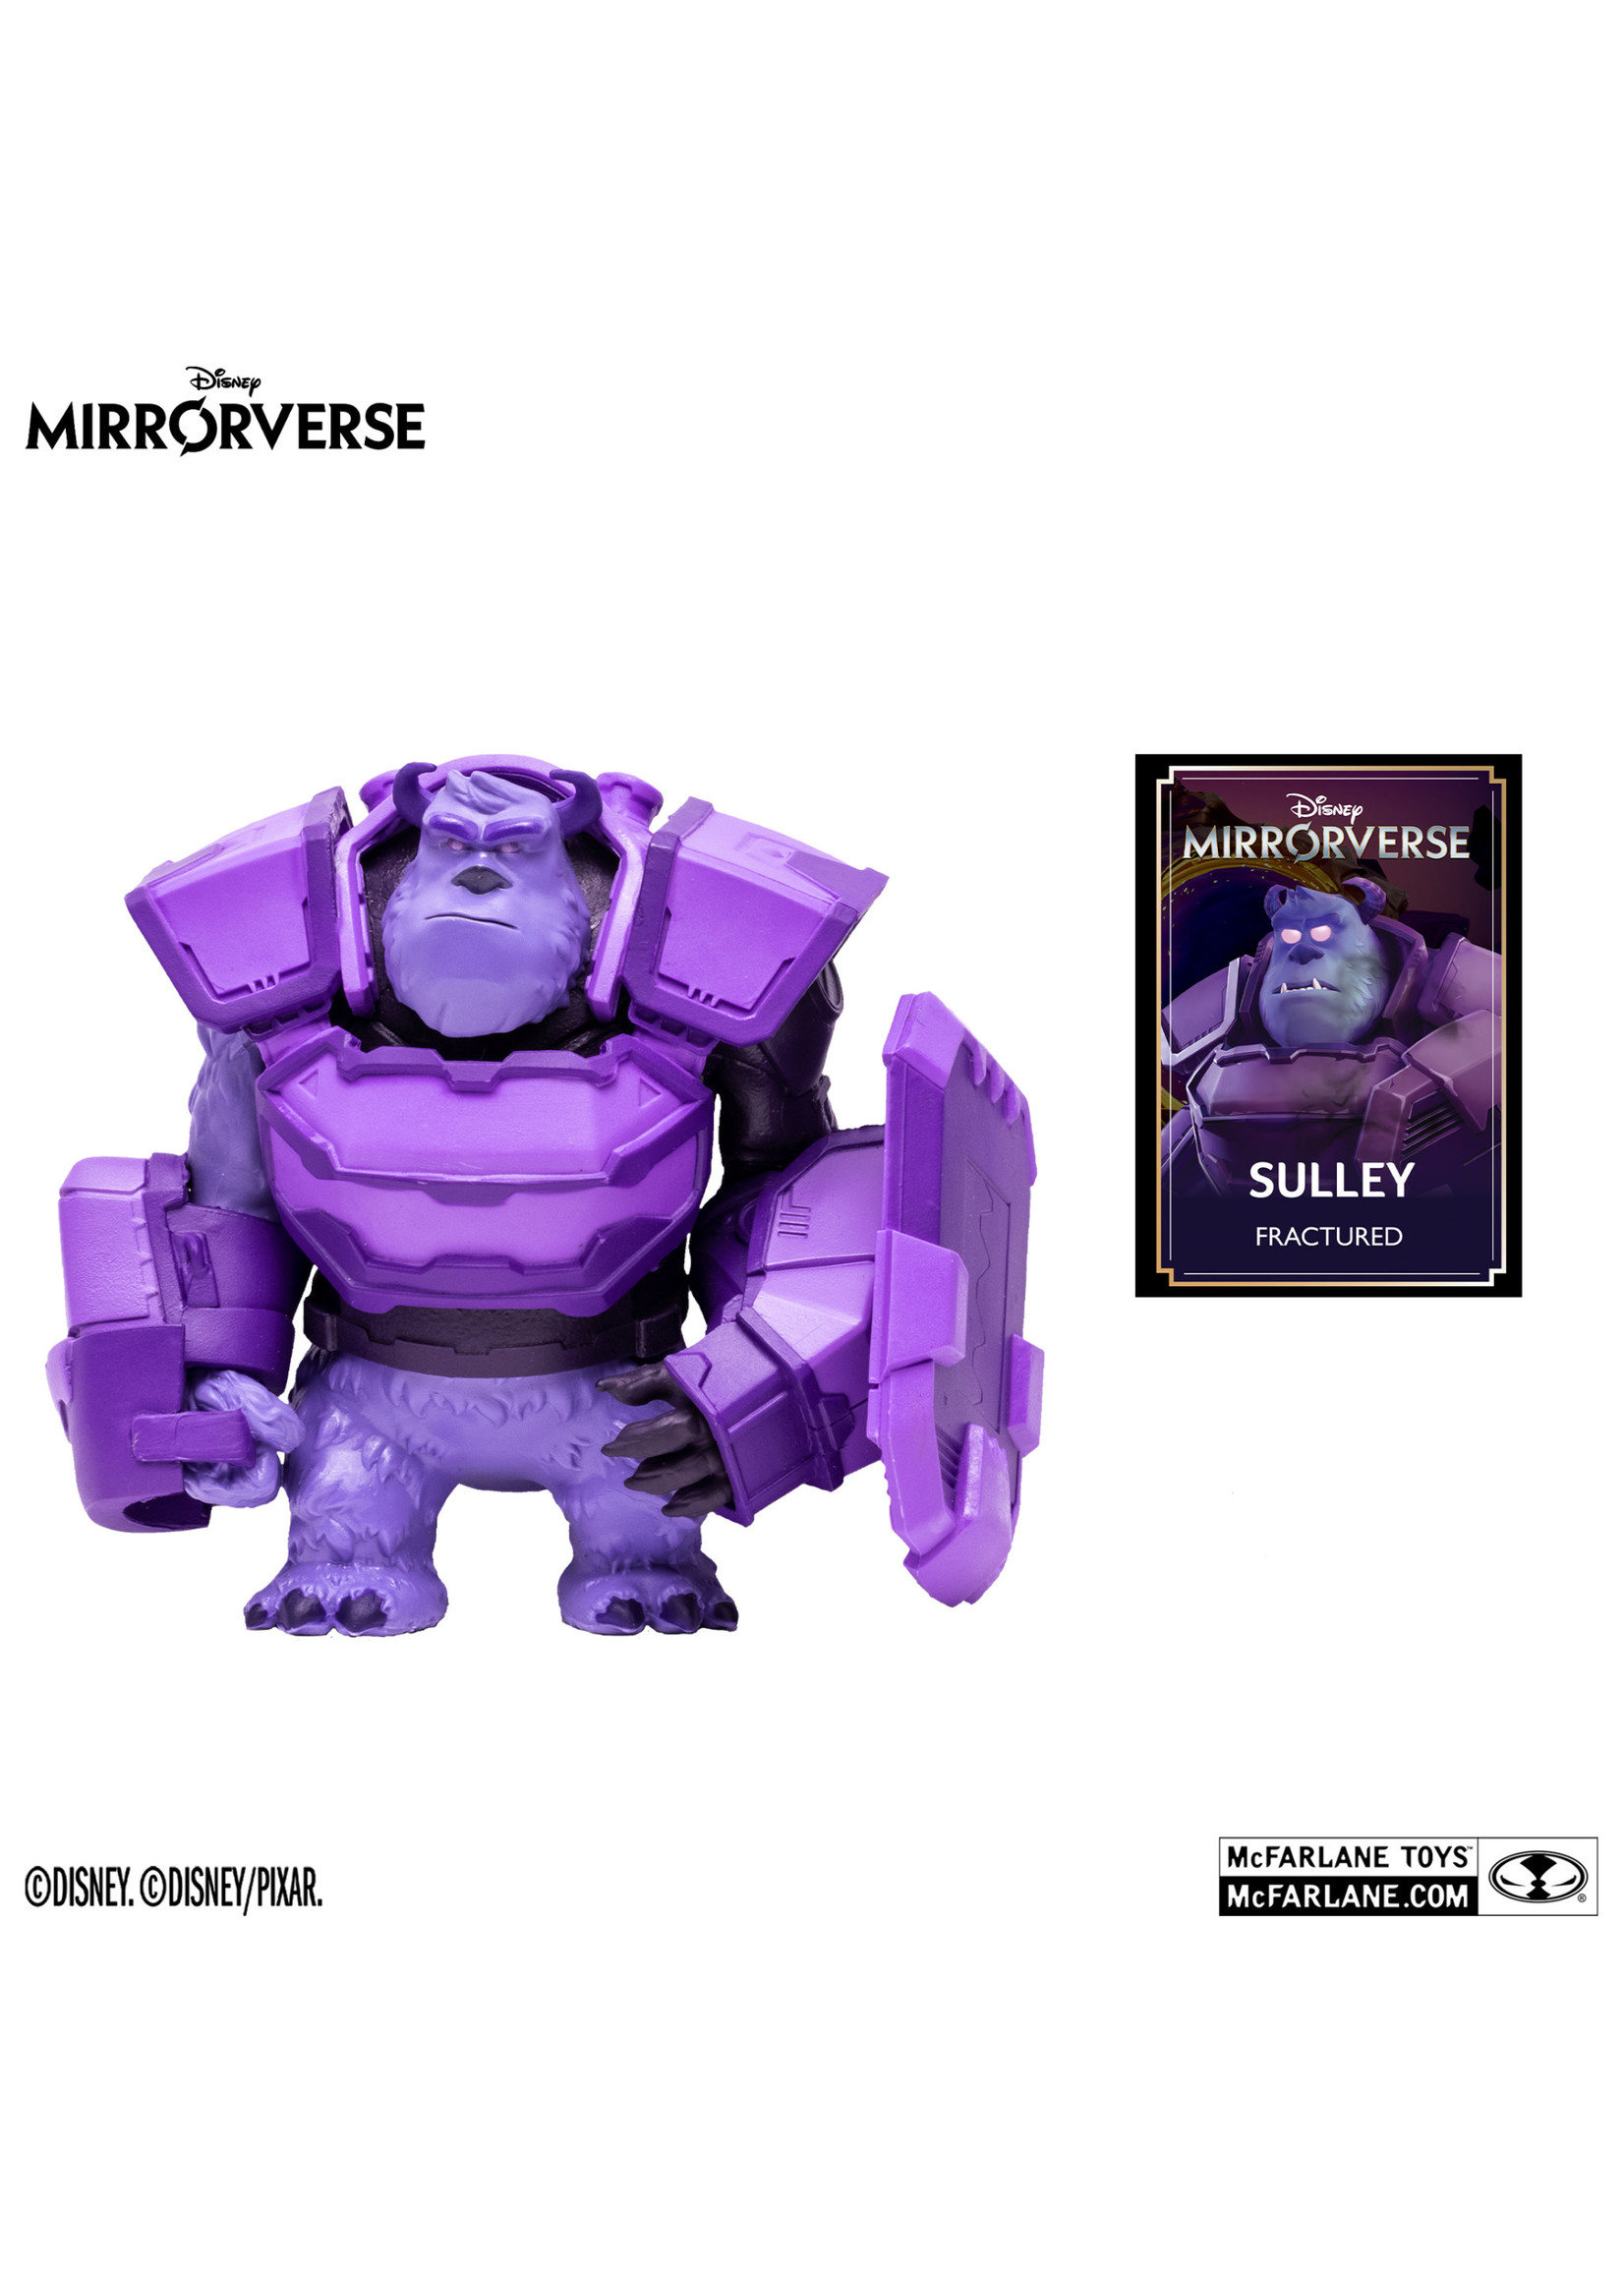 McFarlane toys Disney Mirrorverse - Sulley fractured